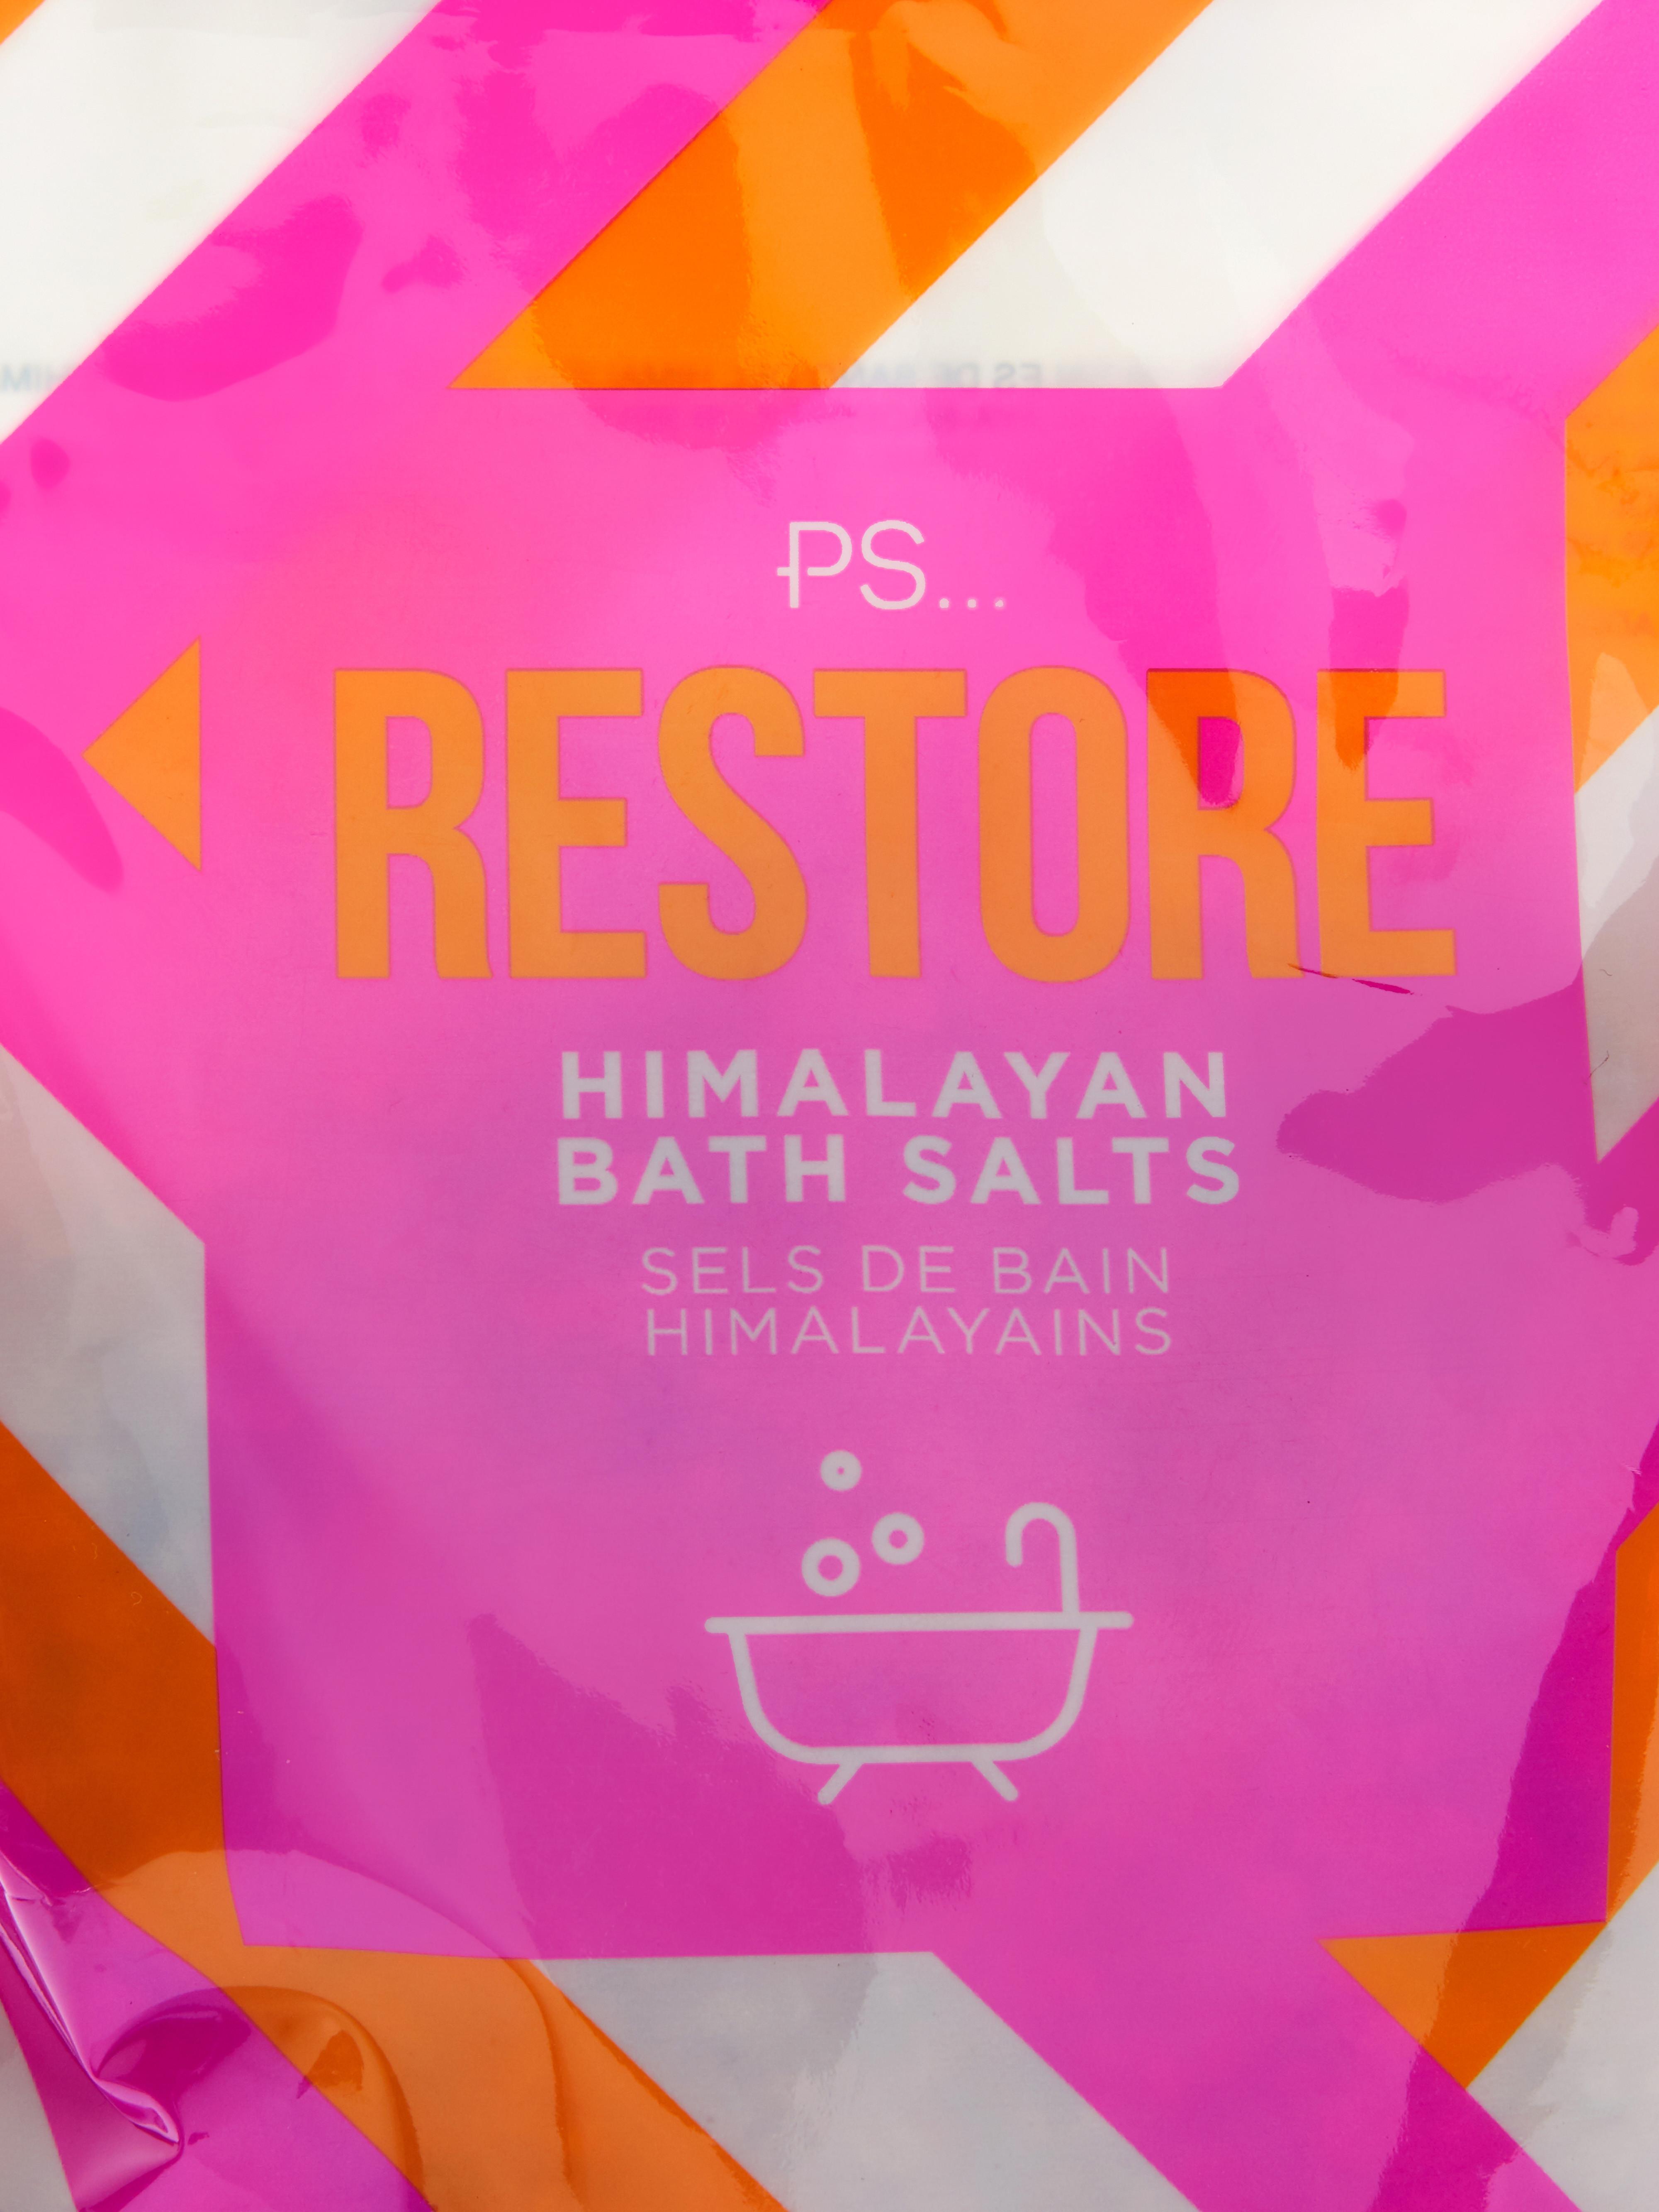 PS Restore Himalayan Bath Salts